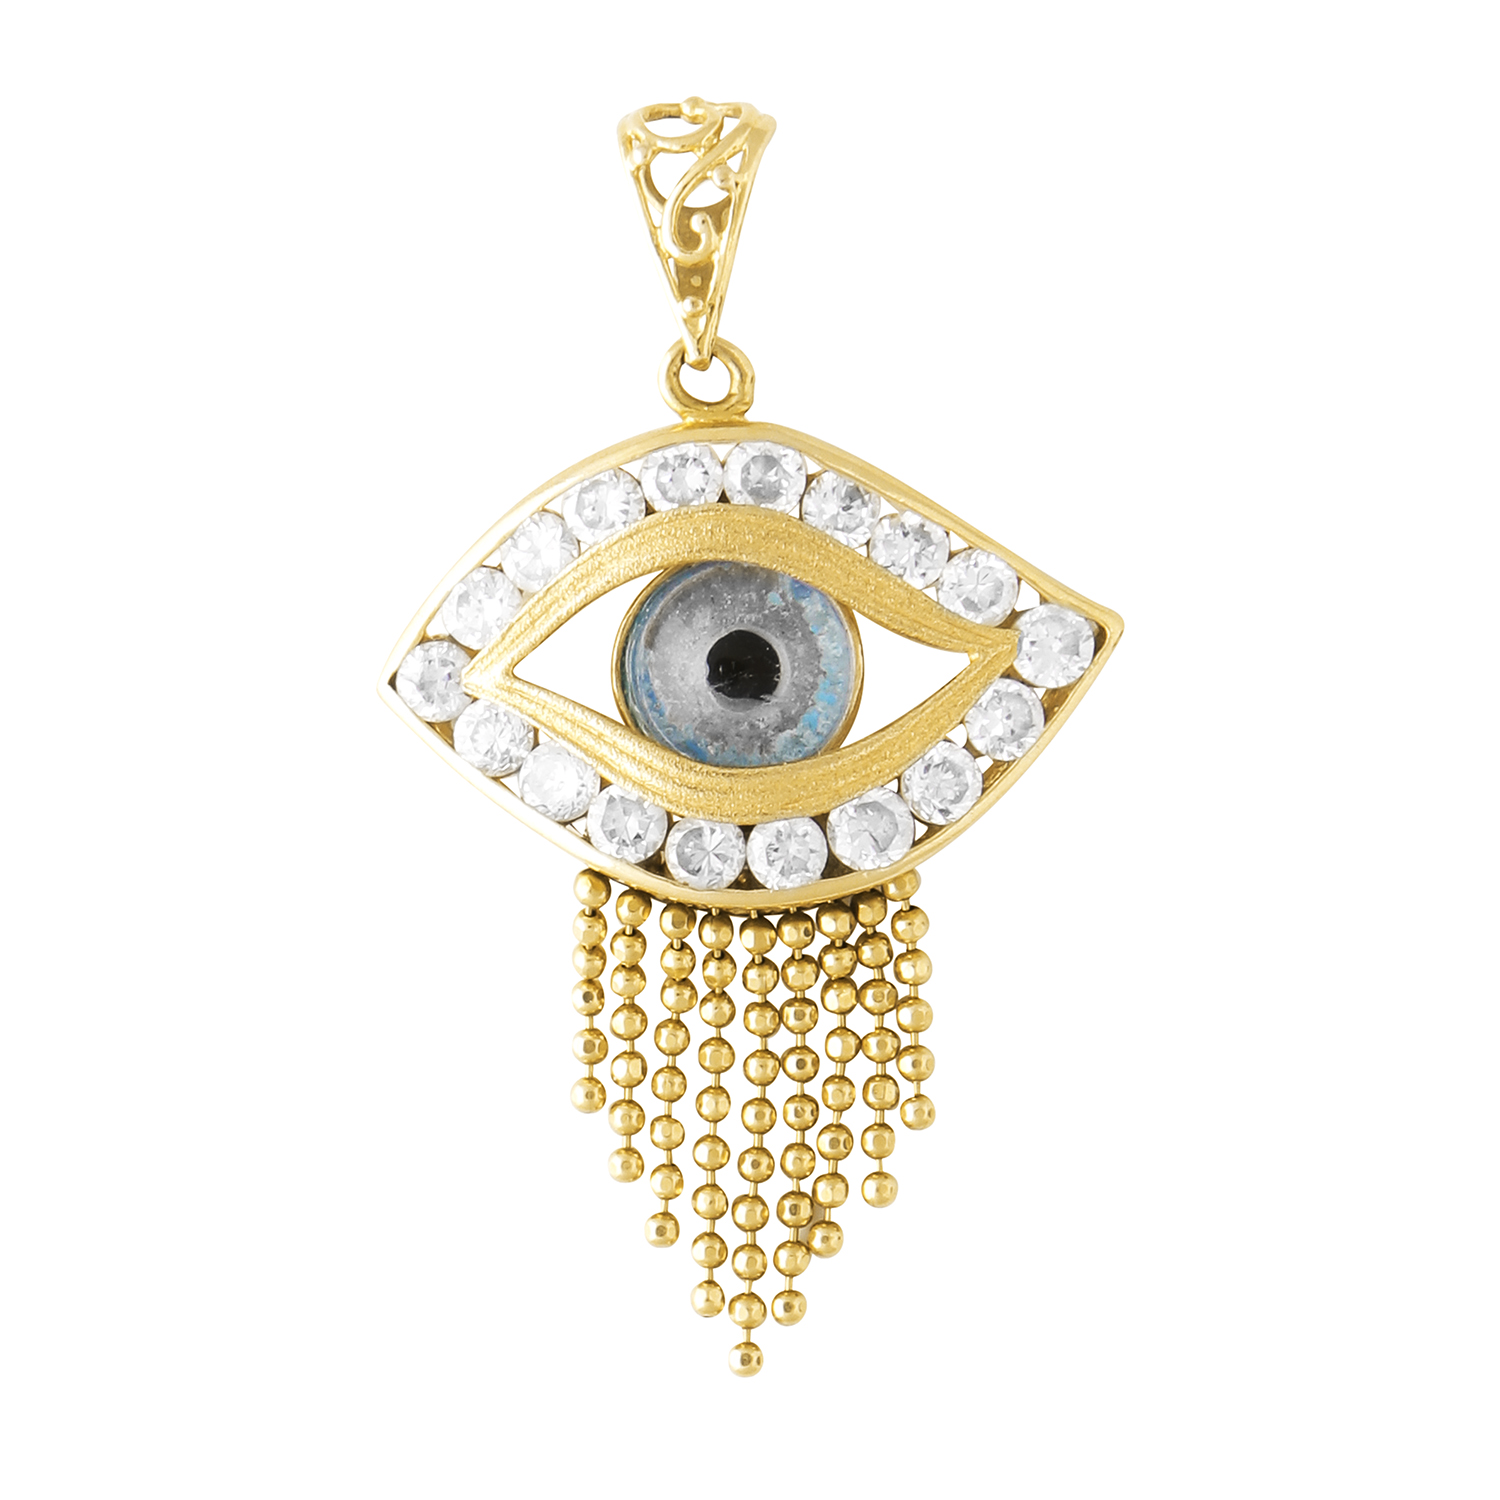 A SEEING EYE TASSEL PENDANT in high carat yellow gold, the jewelled seeing eye motif suspending